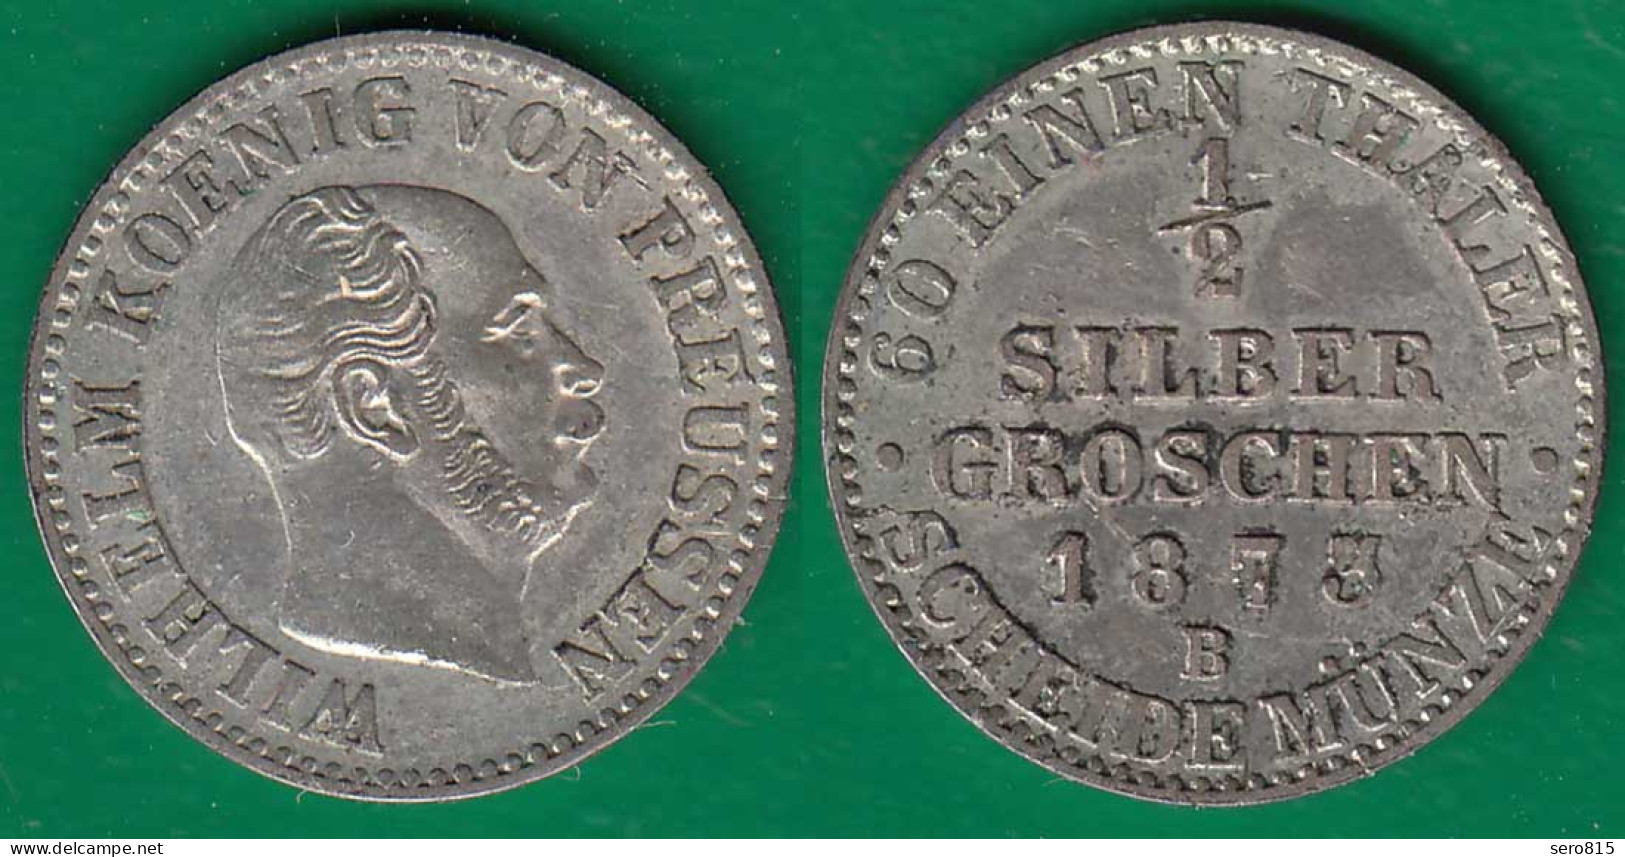 Brandenburg-Preussen 1 Silbergroschen Münze 1873 B Wilhelm I. 1861-1888     (32526 - Piccole Monete & Altre Suddivisioni